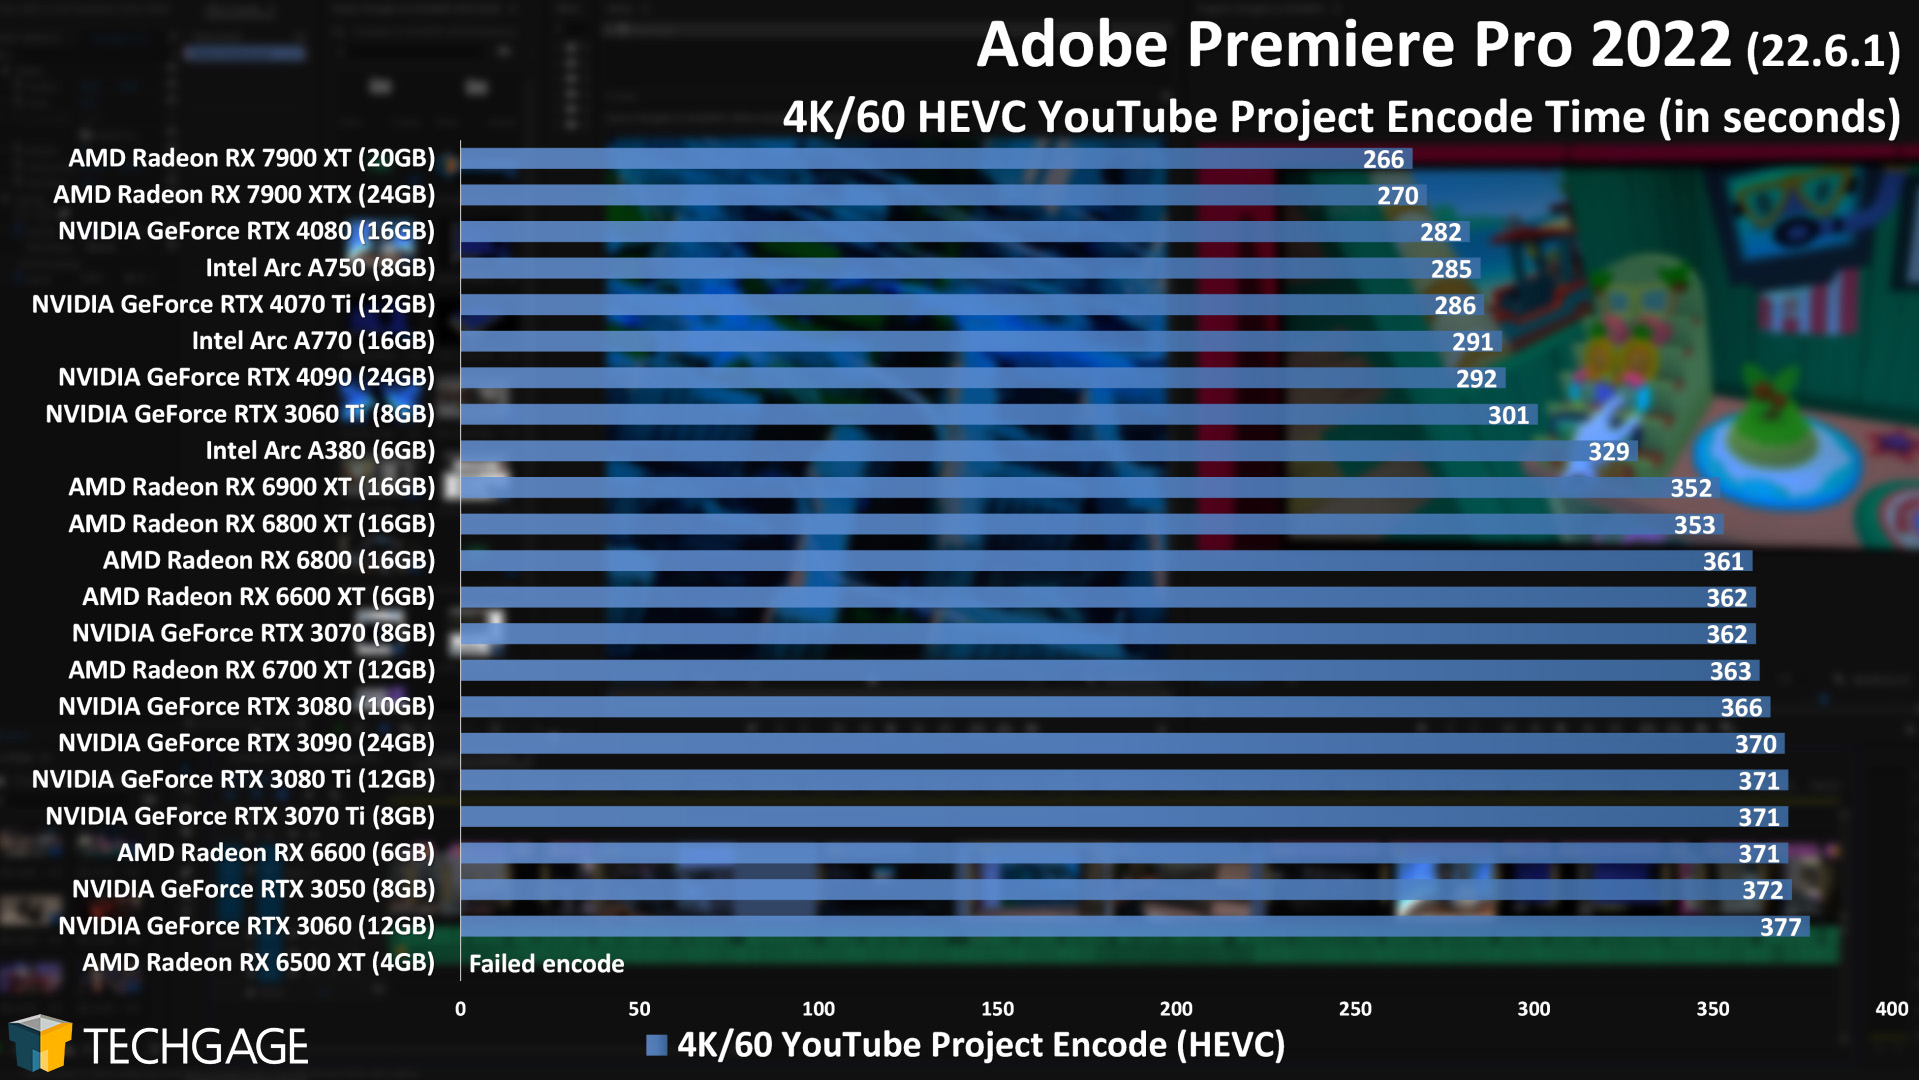 Adobe Premiere Pro - GPU Encoding Performance (4K YouTube Project)